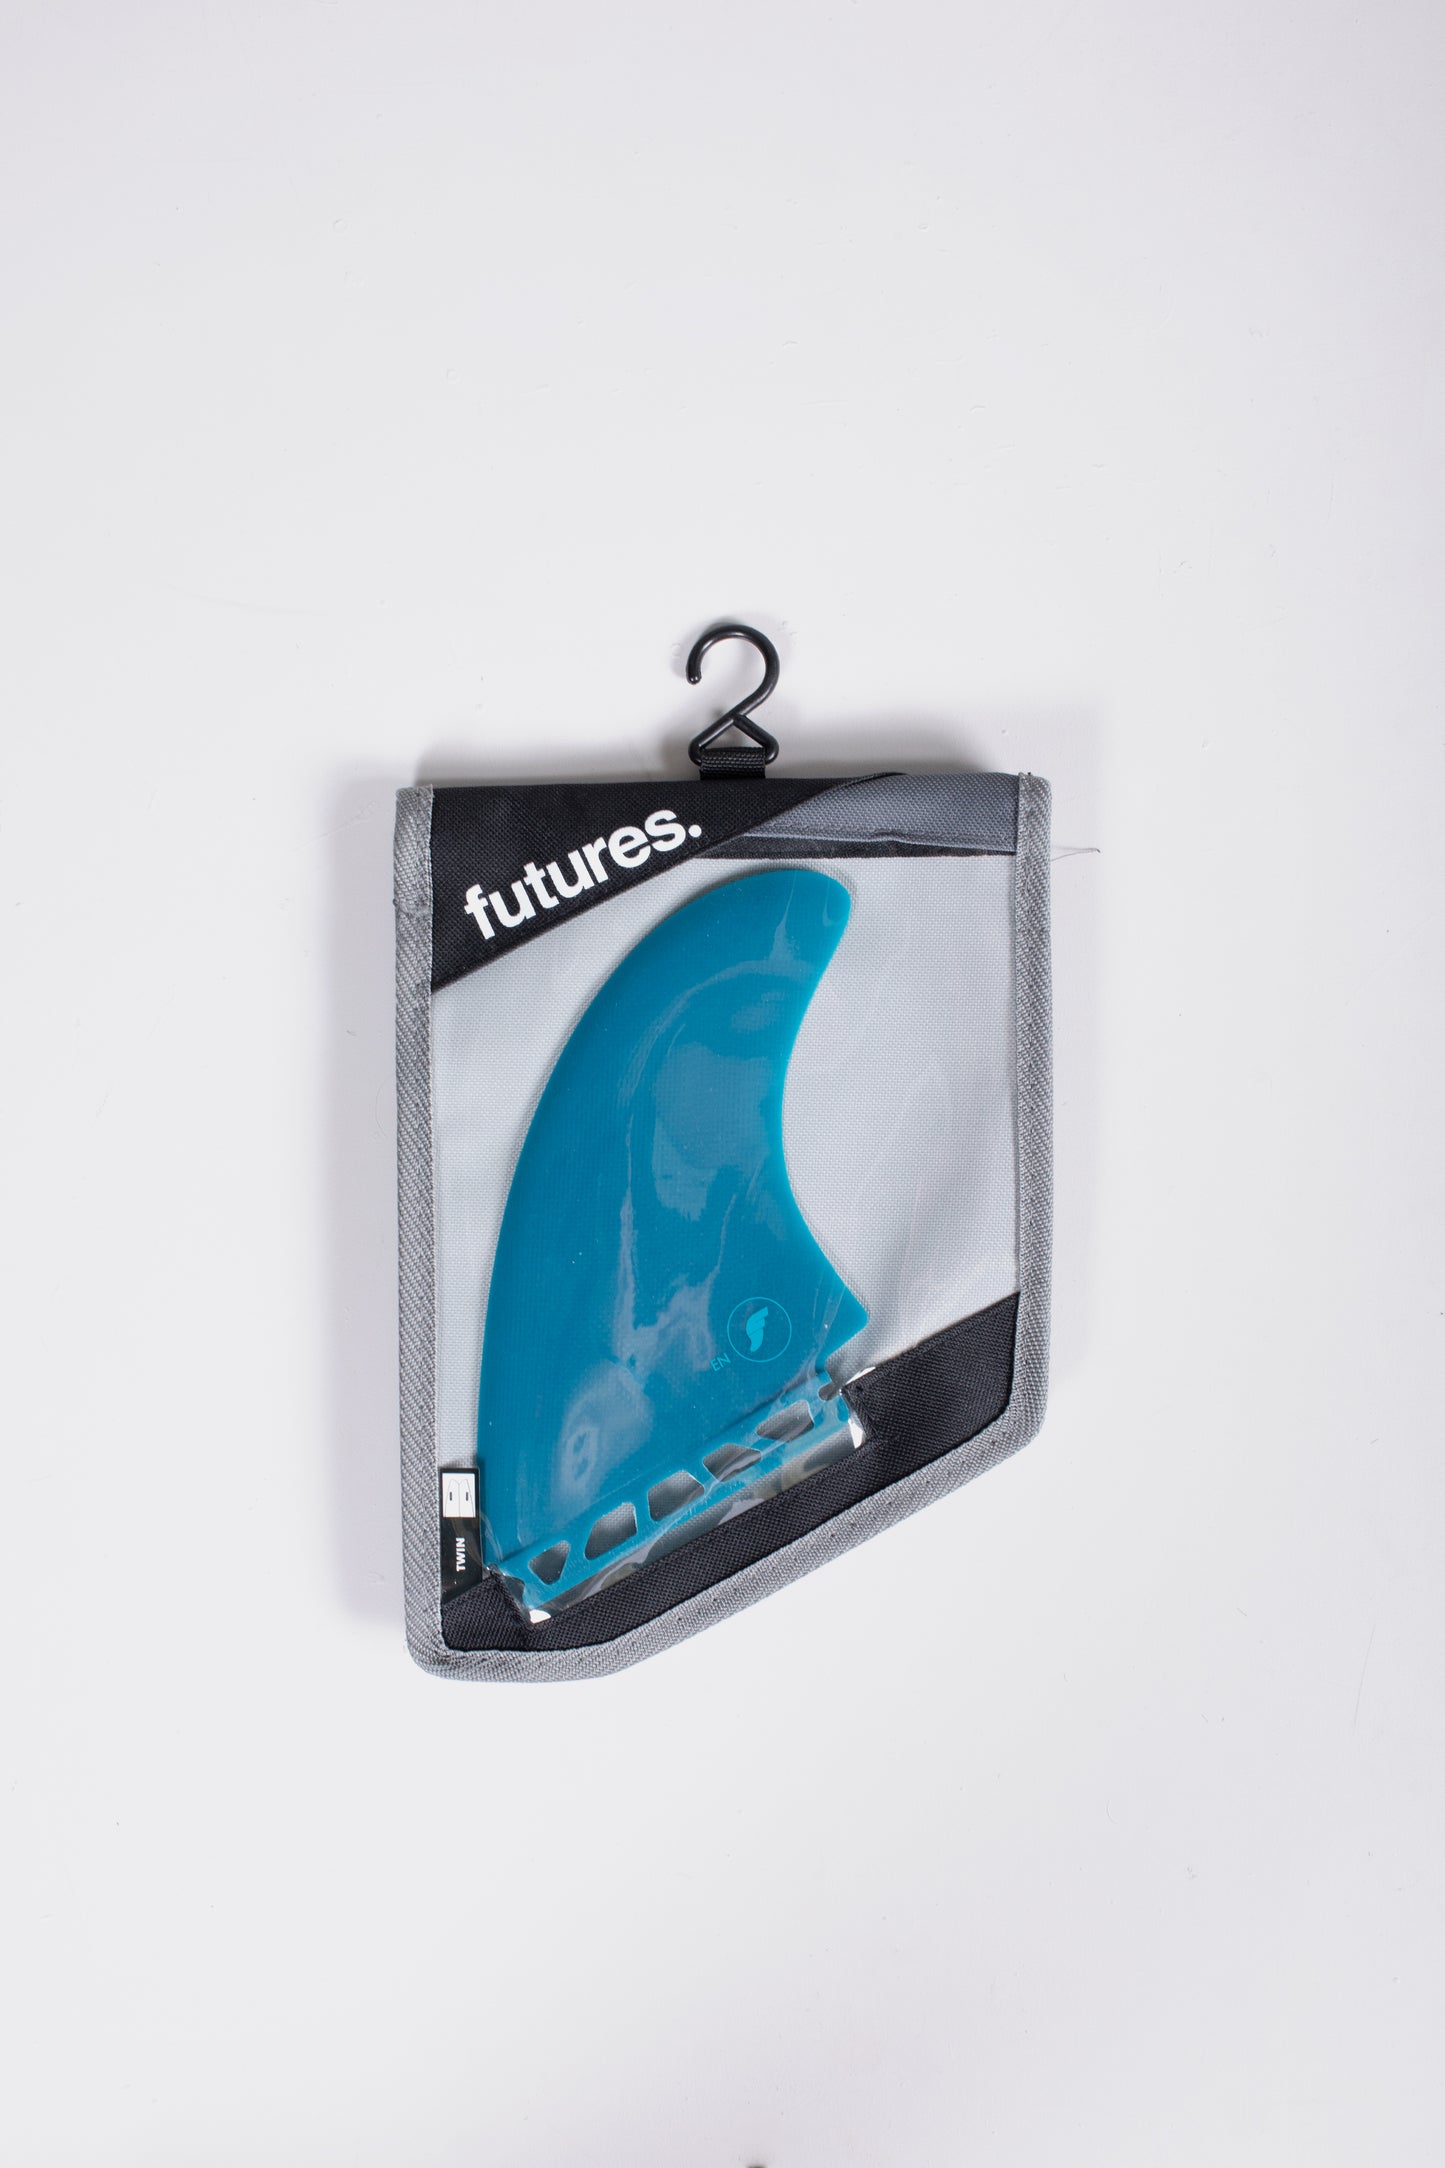 
                  
                    Pukas Surf Shop - Futures - En twin - Fiberglass
                  
                